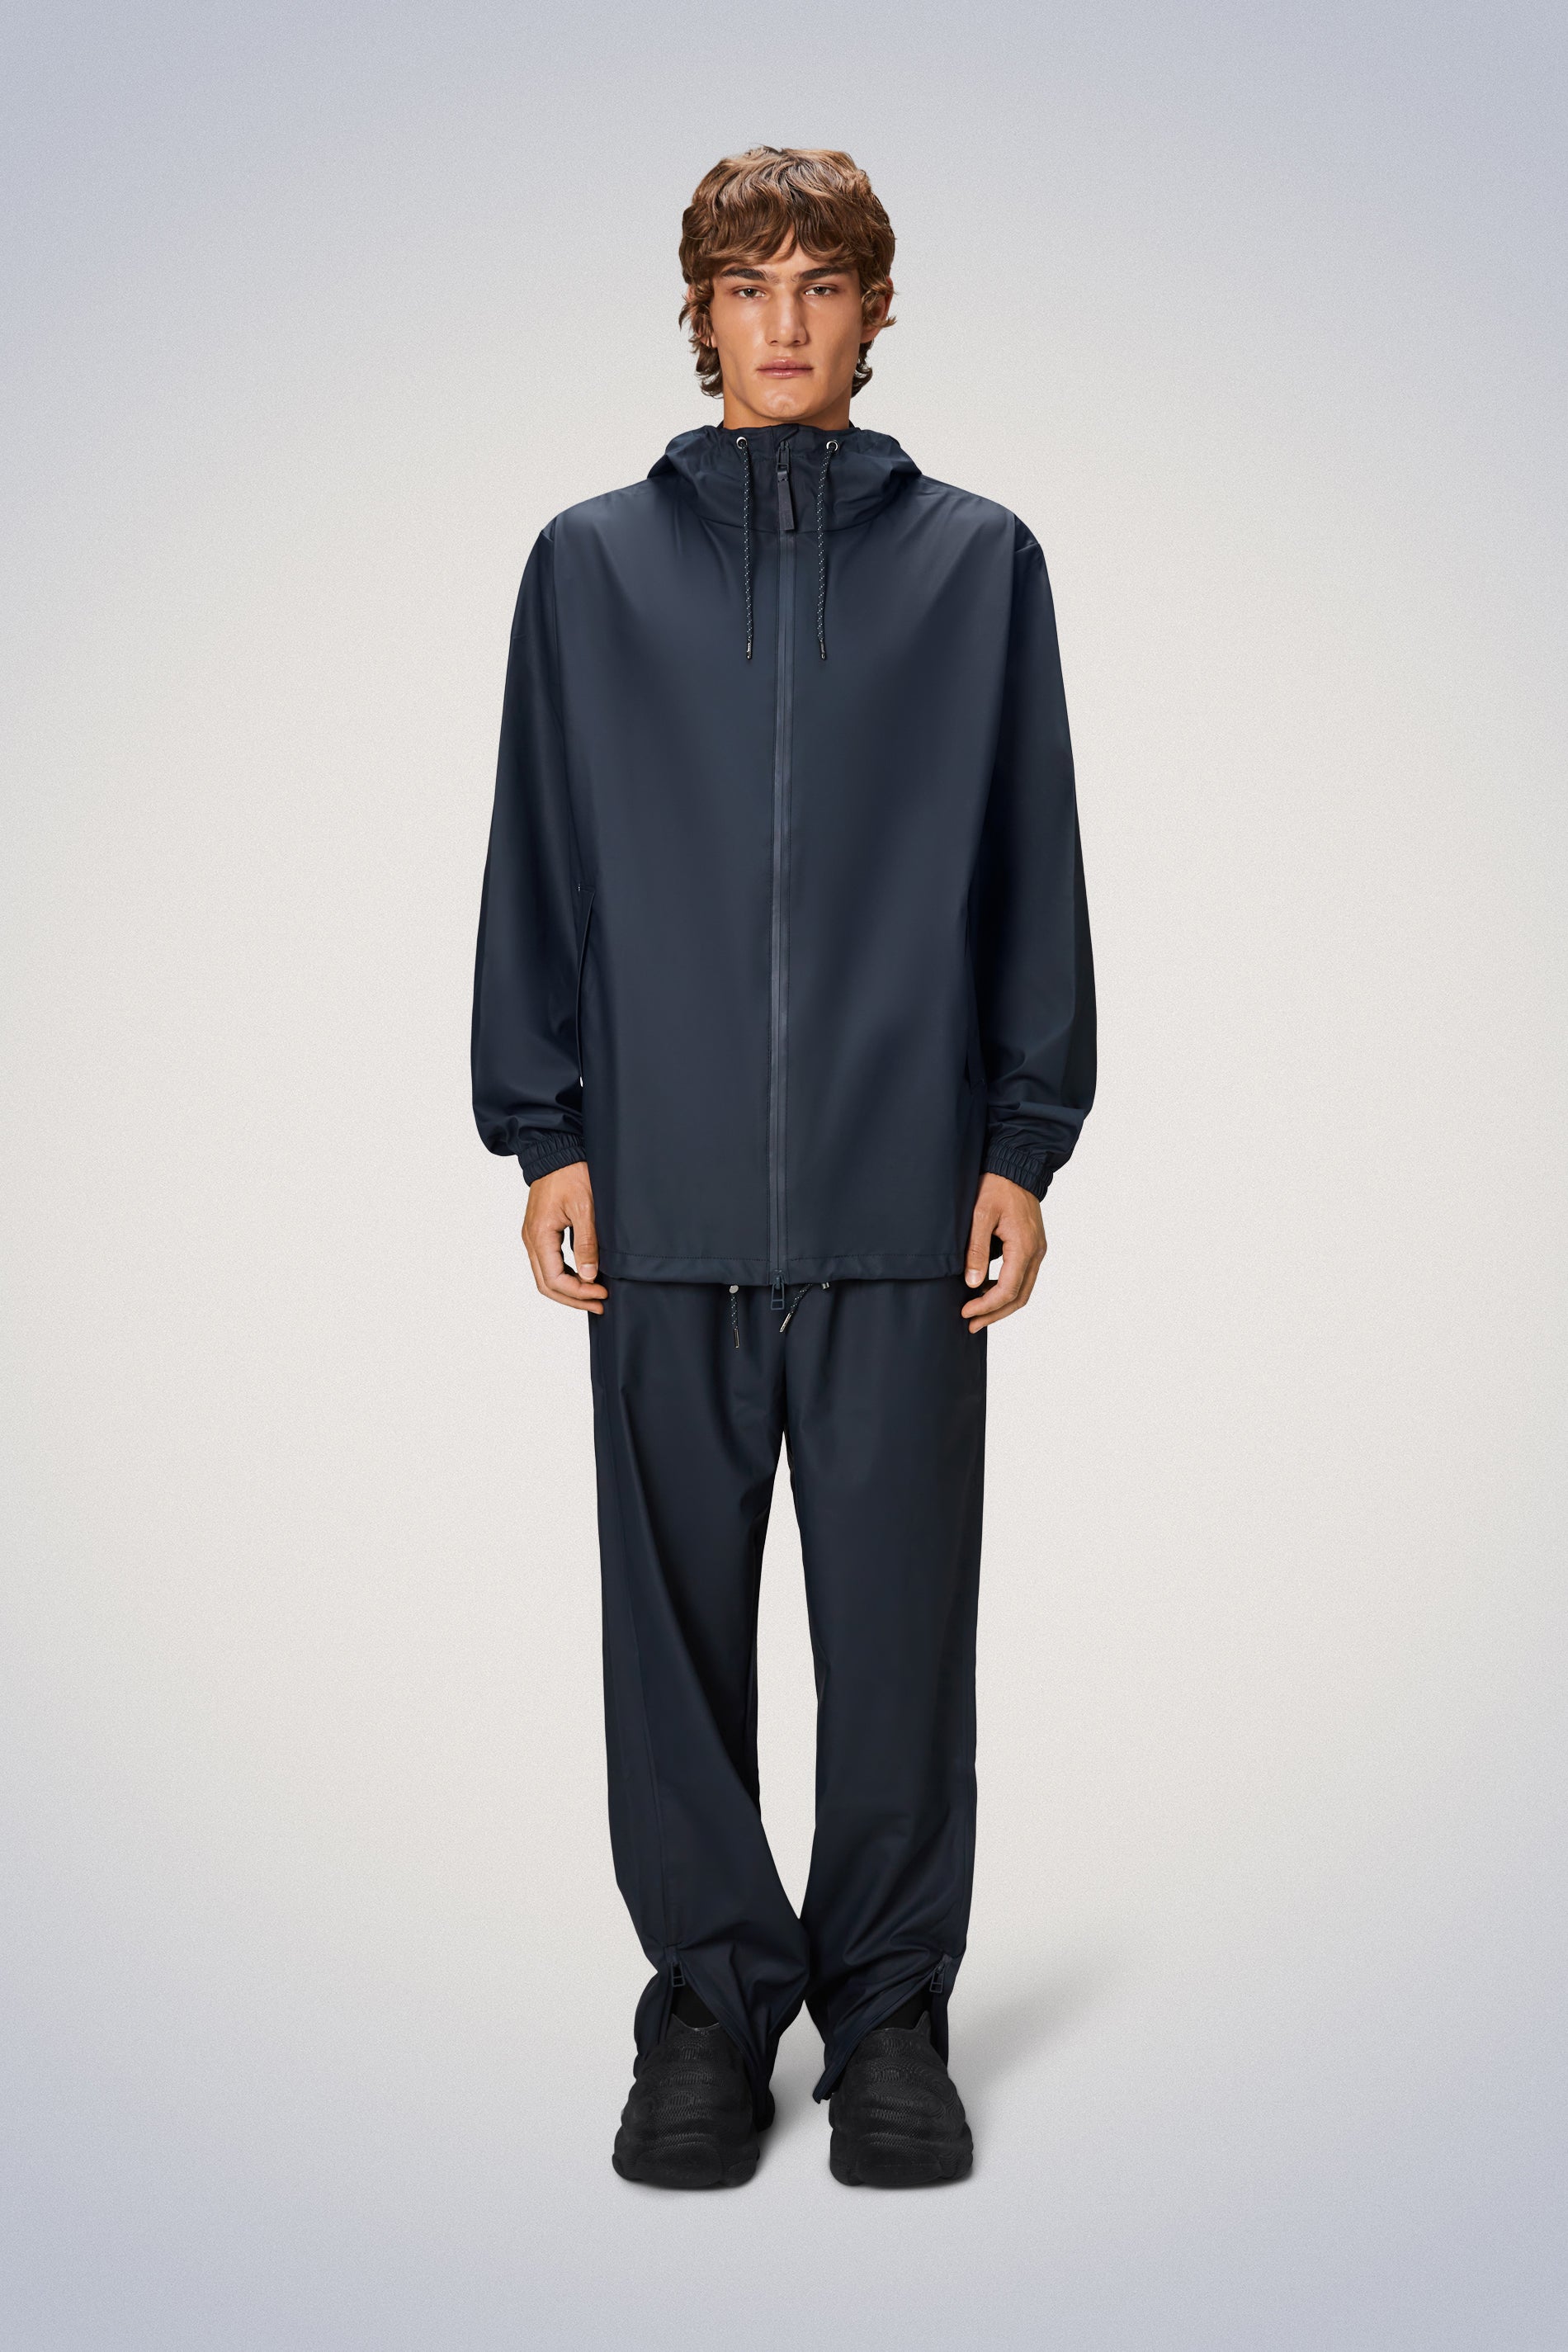 Mens Rainwear | Buy Rain Gear & Rain Suits | Rains® Official